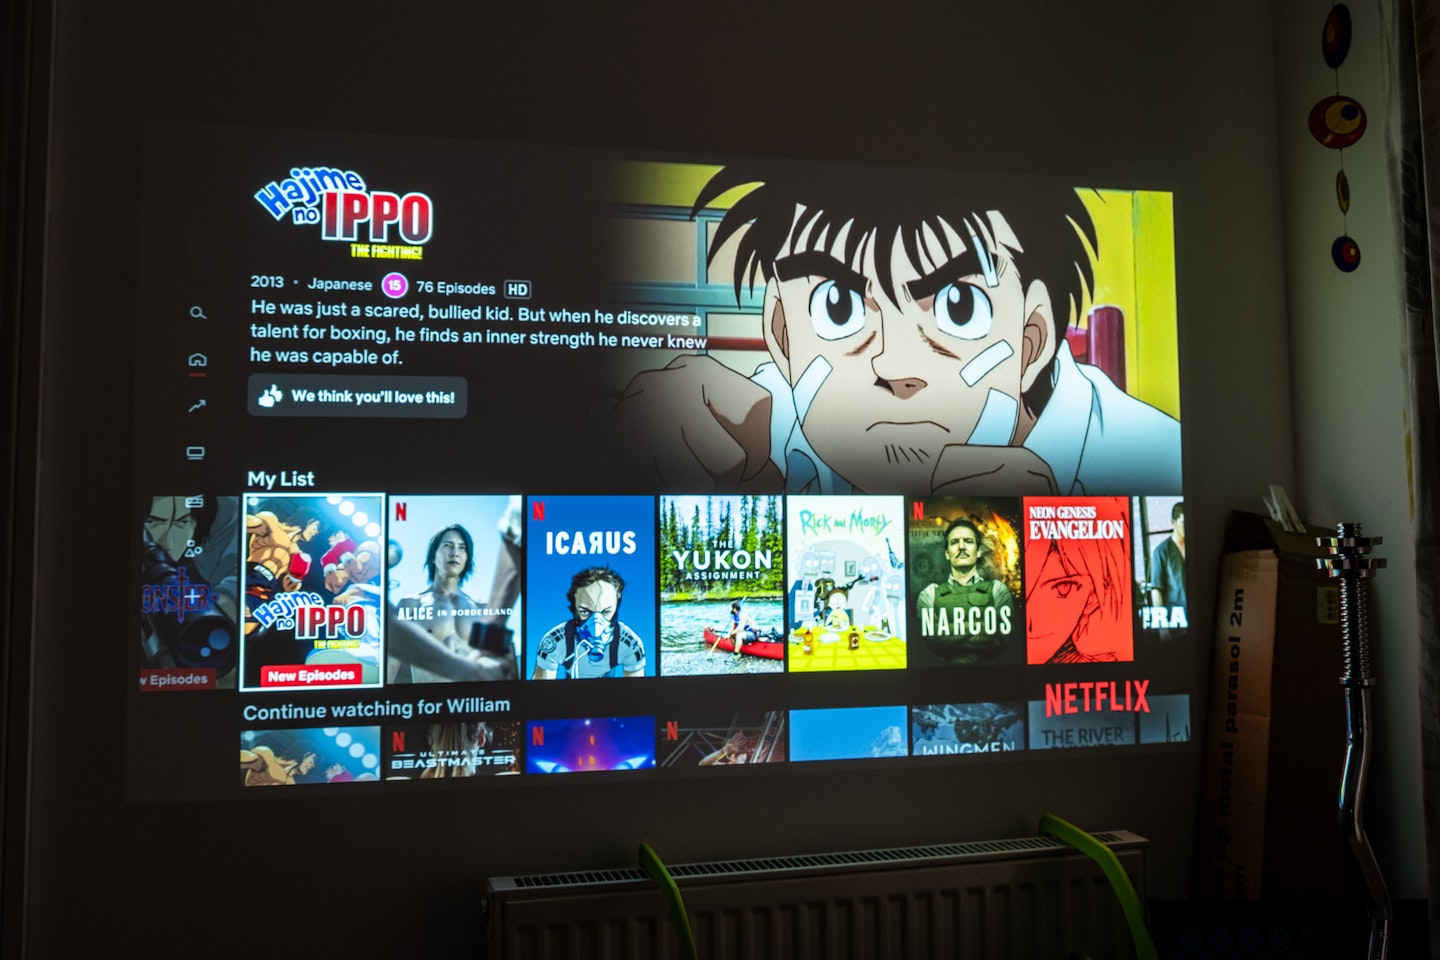 XGIMI HORIZON Pro 4K Projector showing Netflix